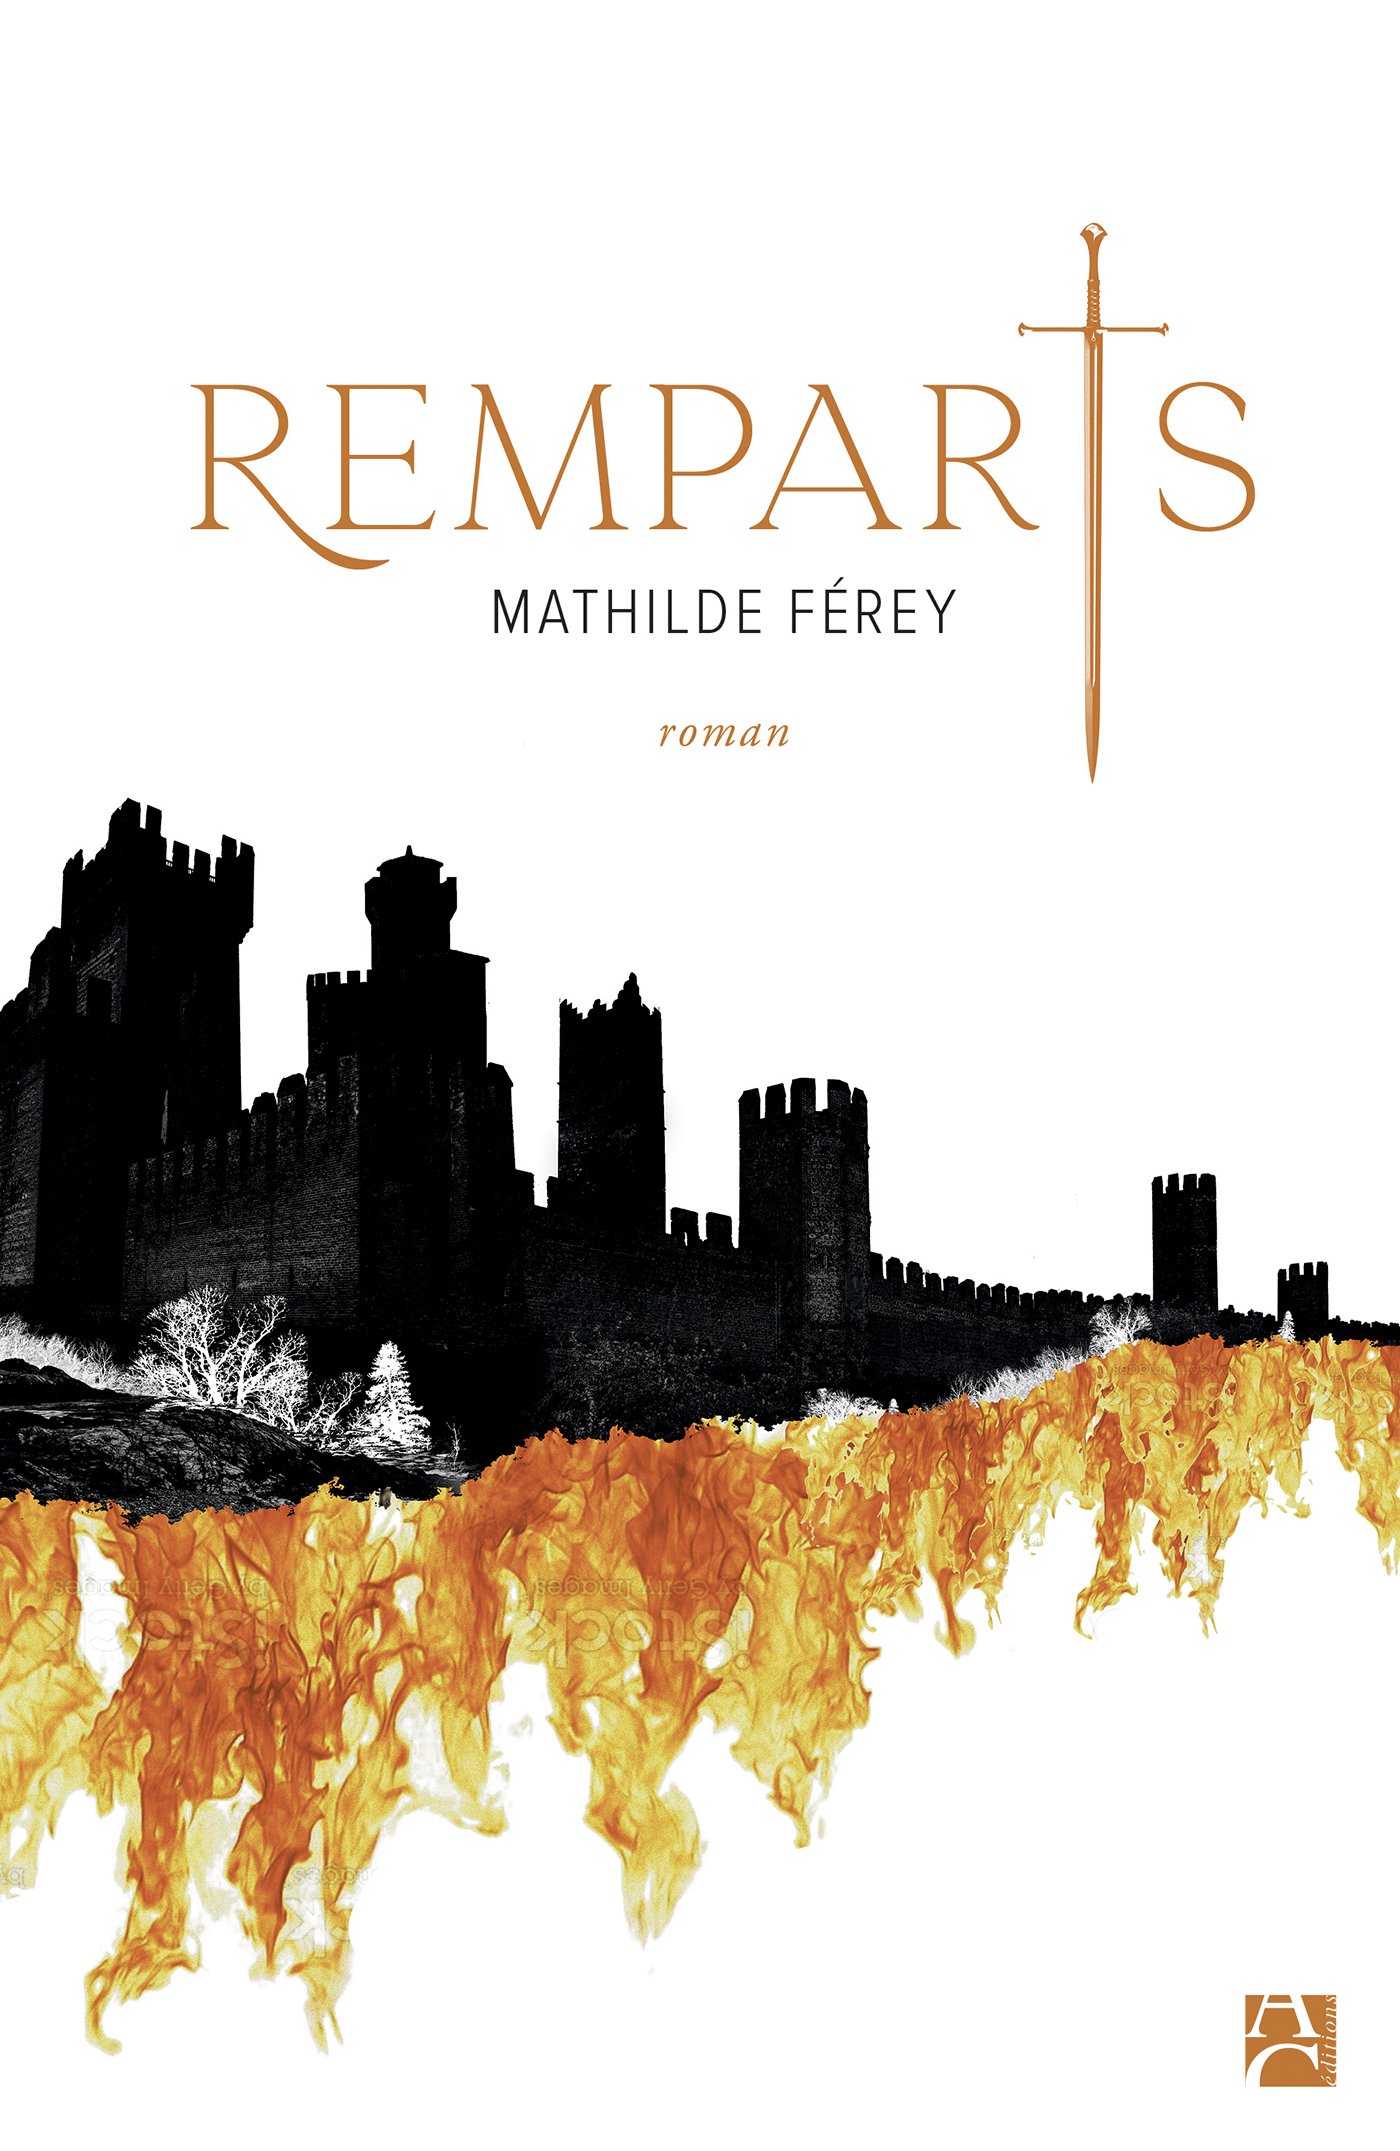 Afficher "Remparts"